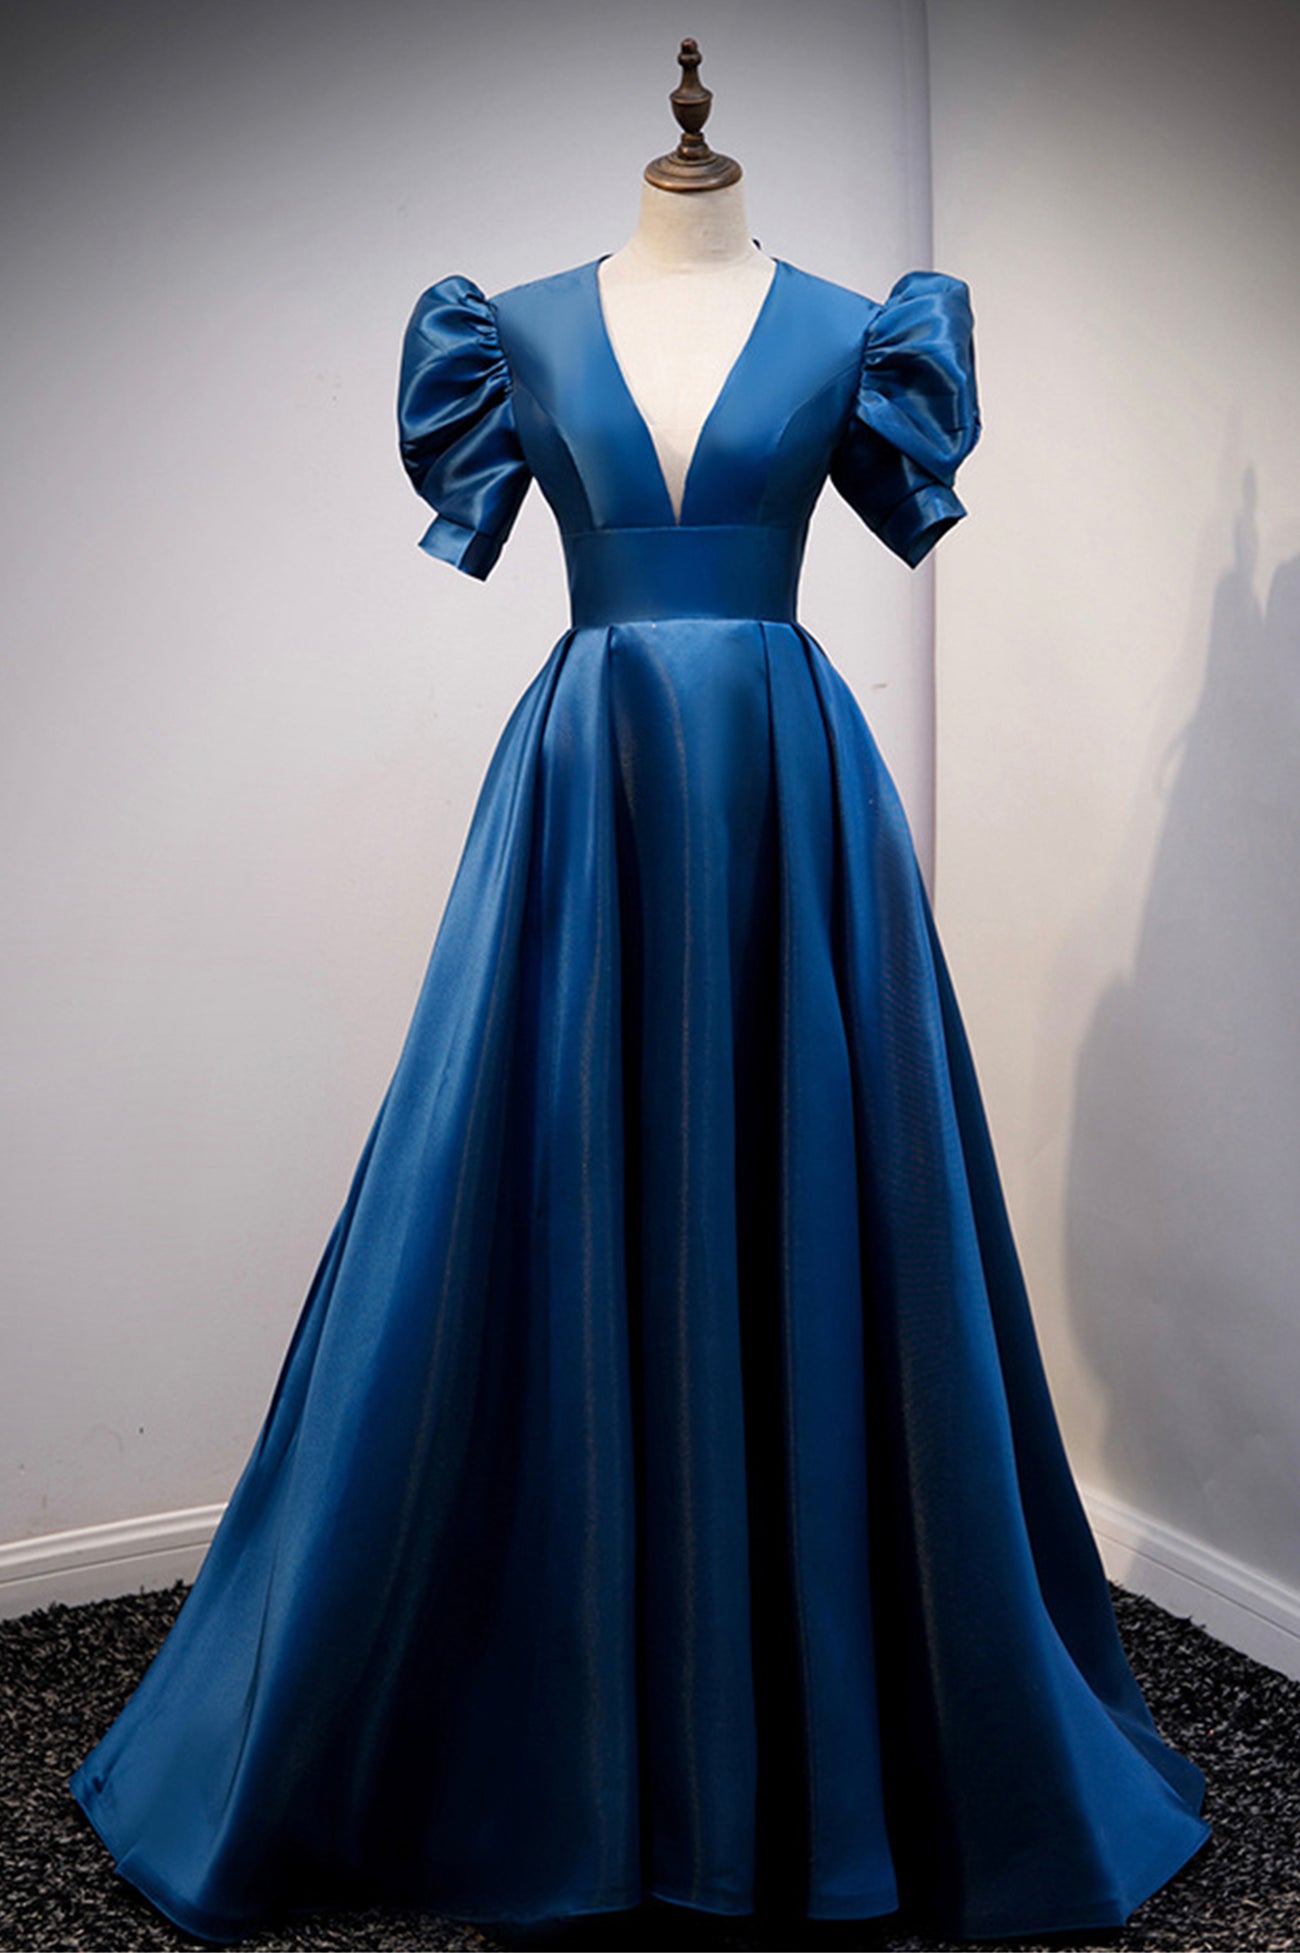 Blue Satin Long A-Line Prom Dress, Elegant Short Sleeve Party Dress